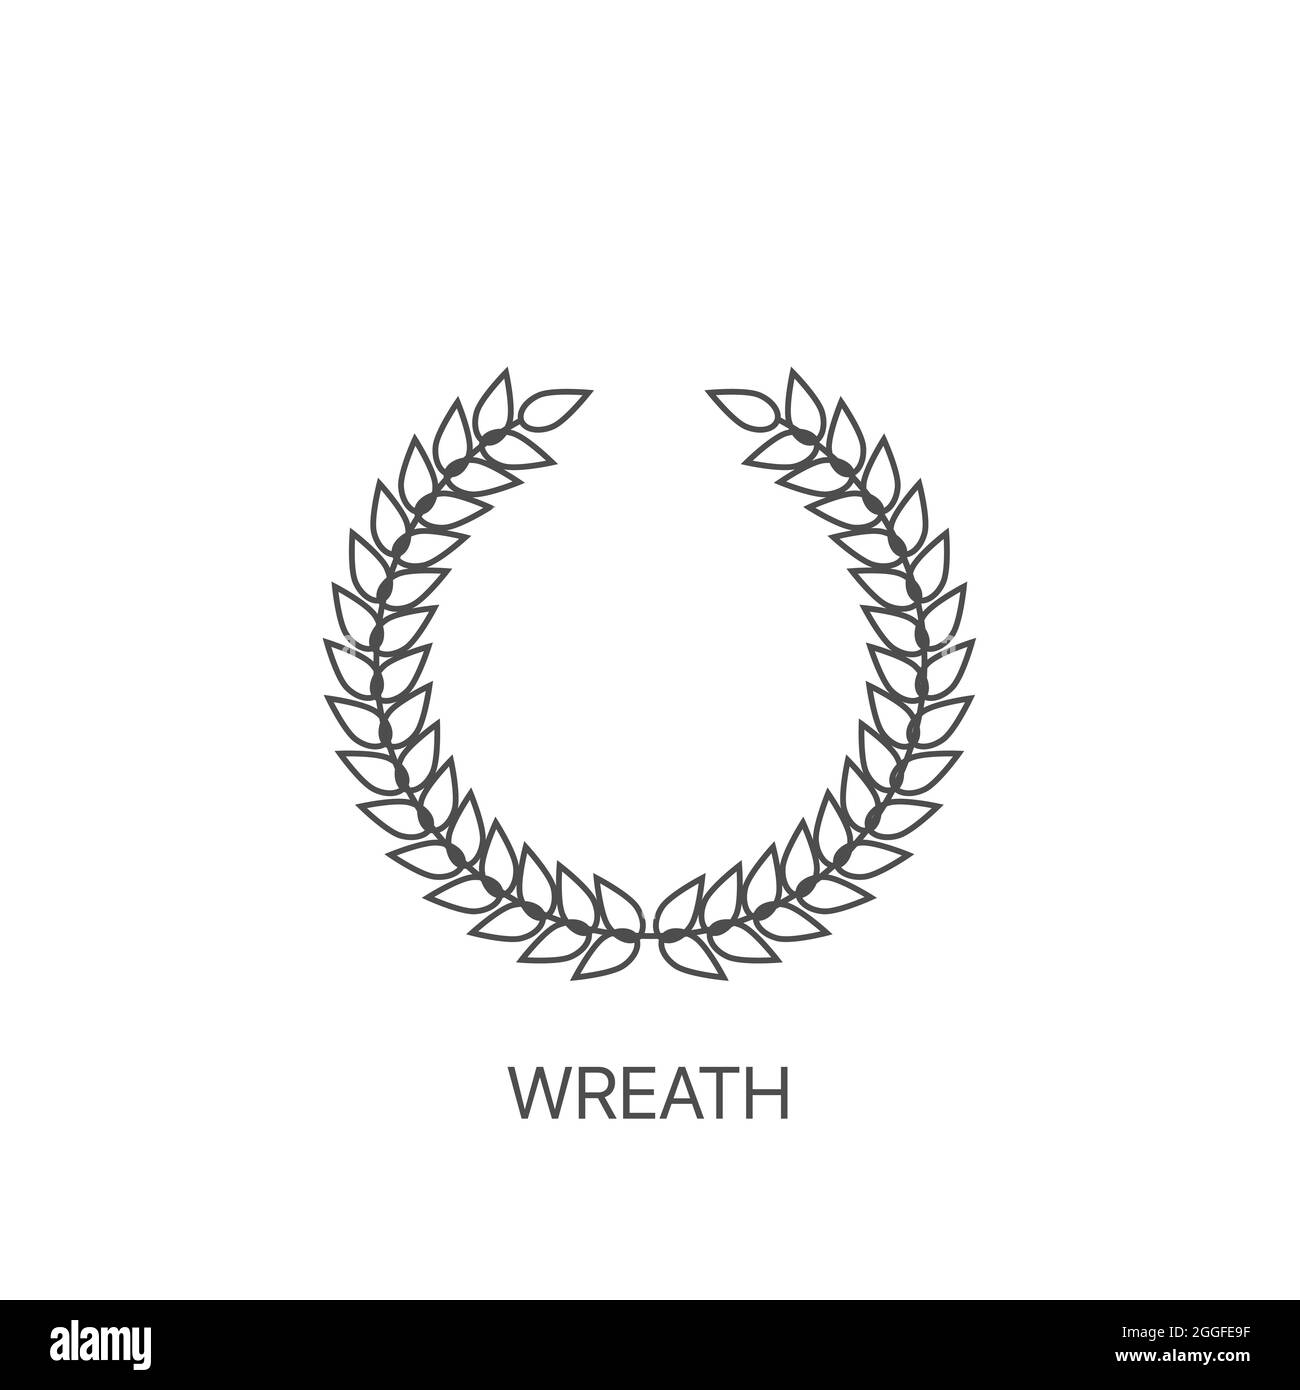 Wreath vector icon. Greek wreath, symbol and icon of victories Stock Vector